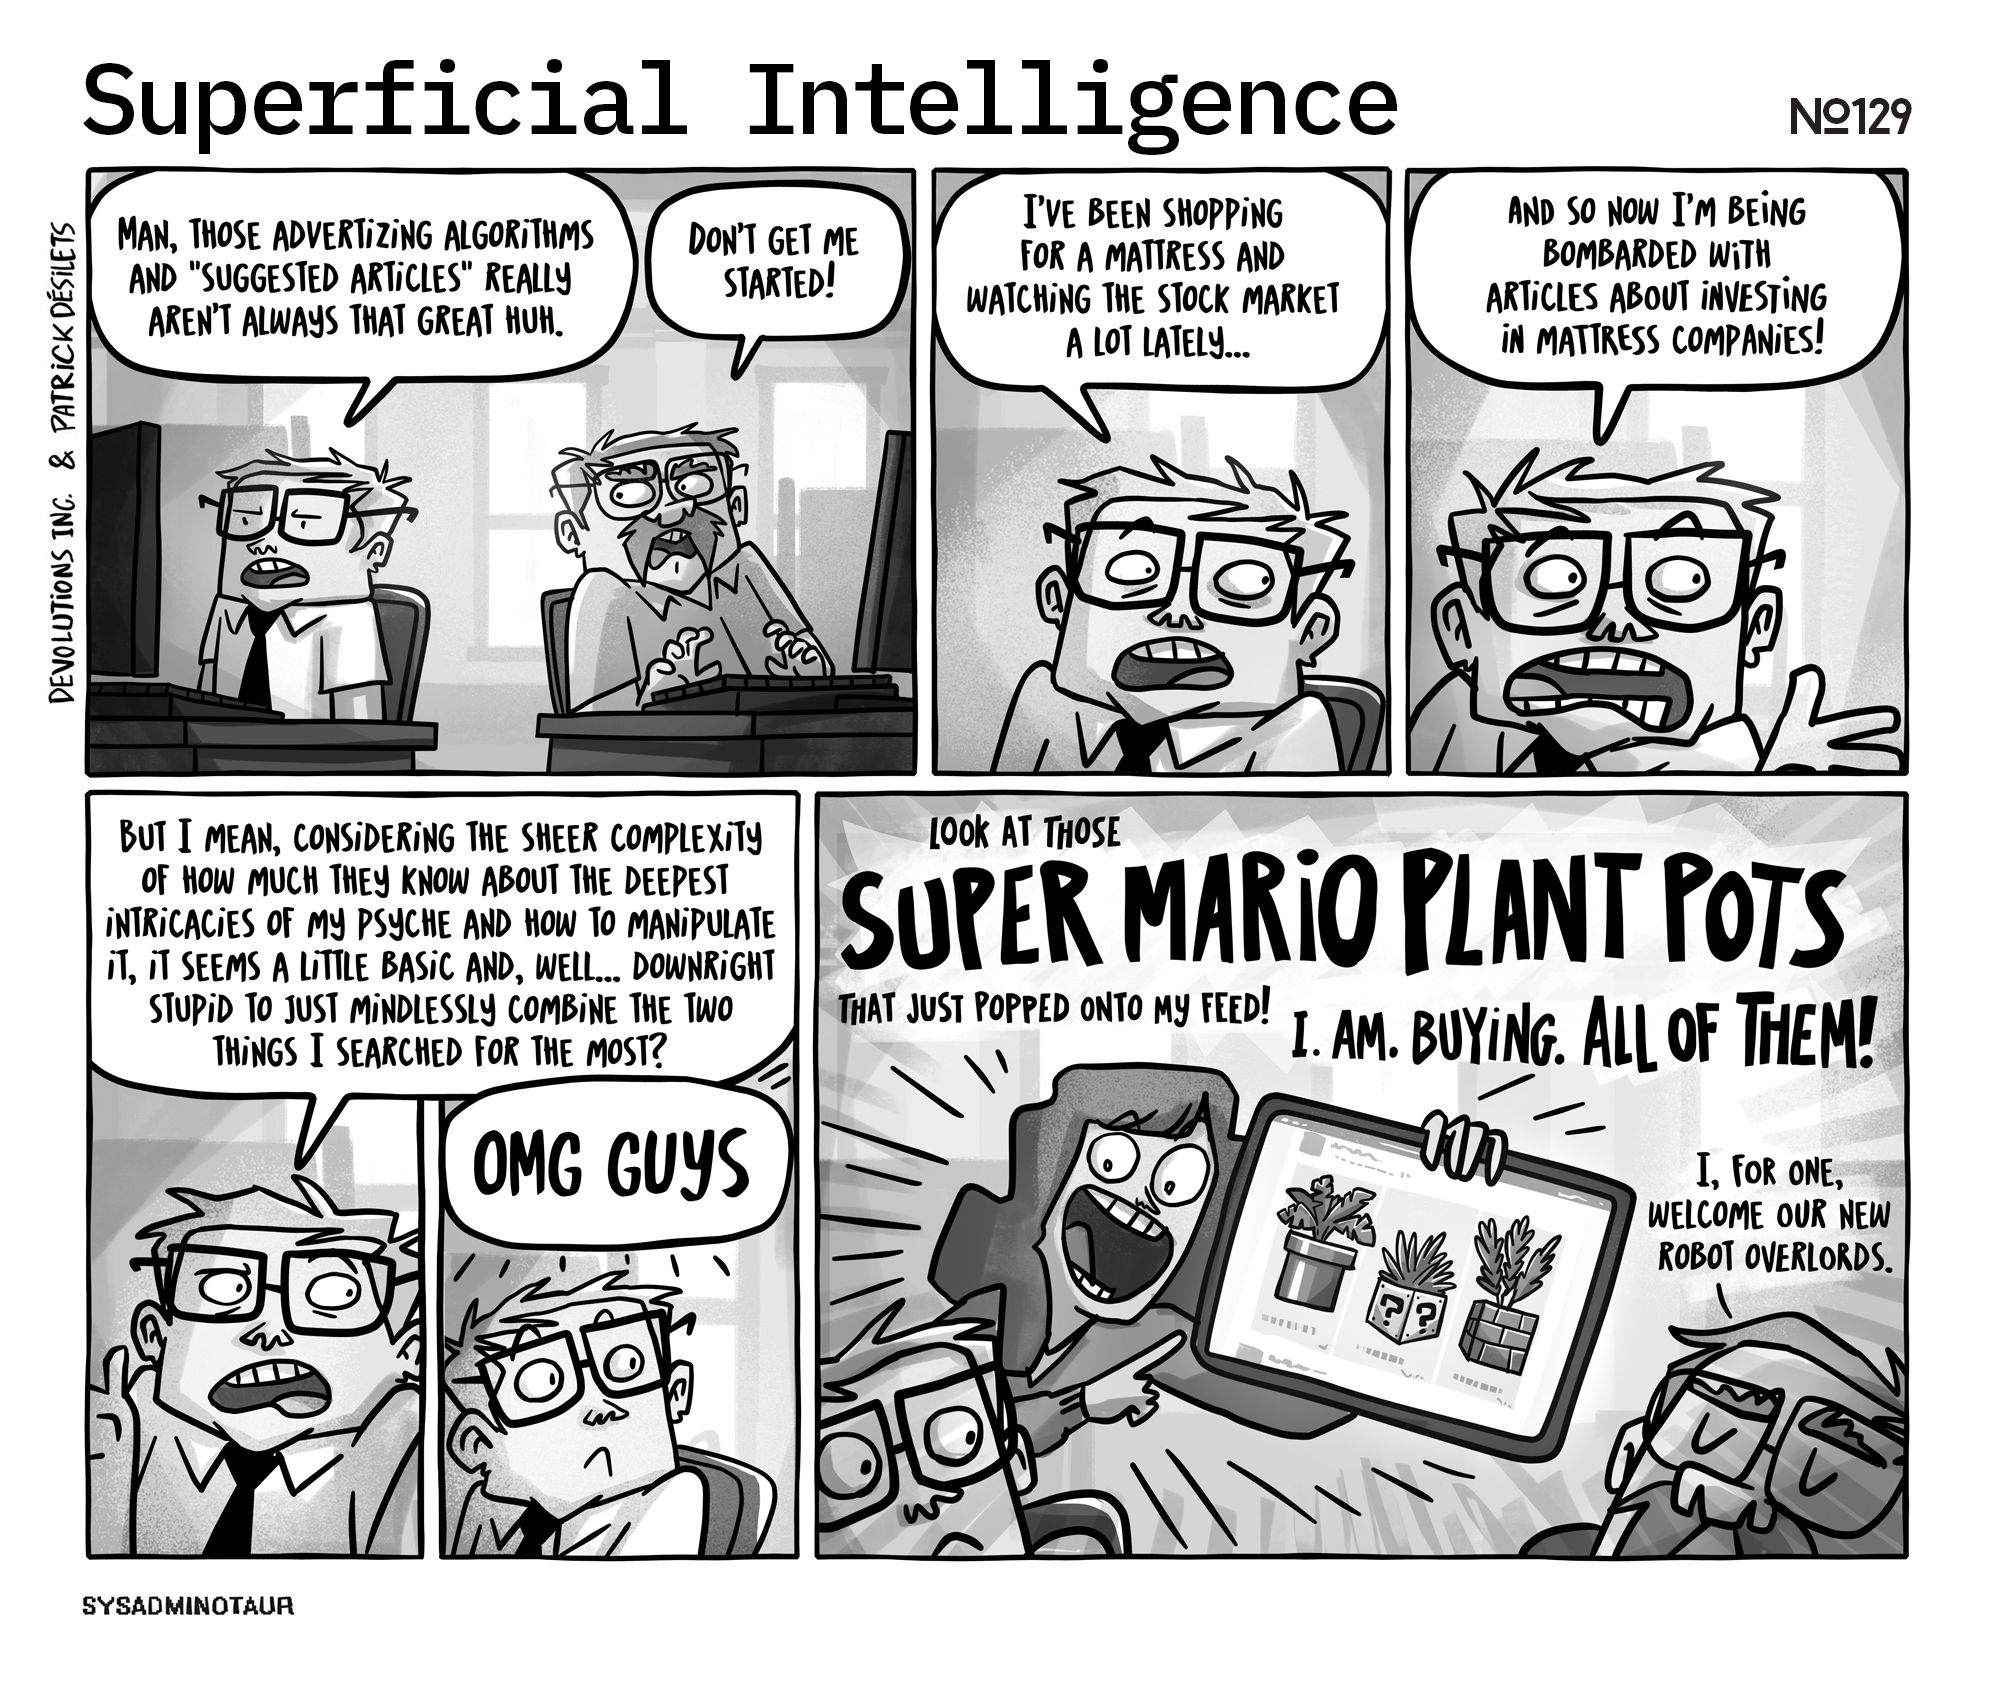 129-superficial-intelligence.jpg